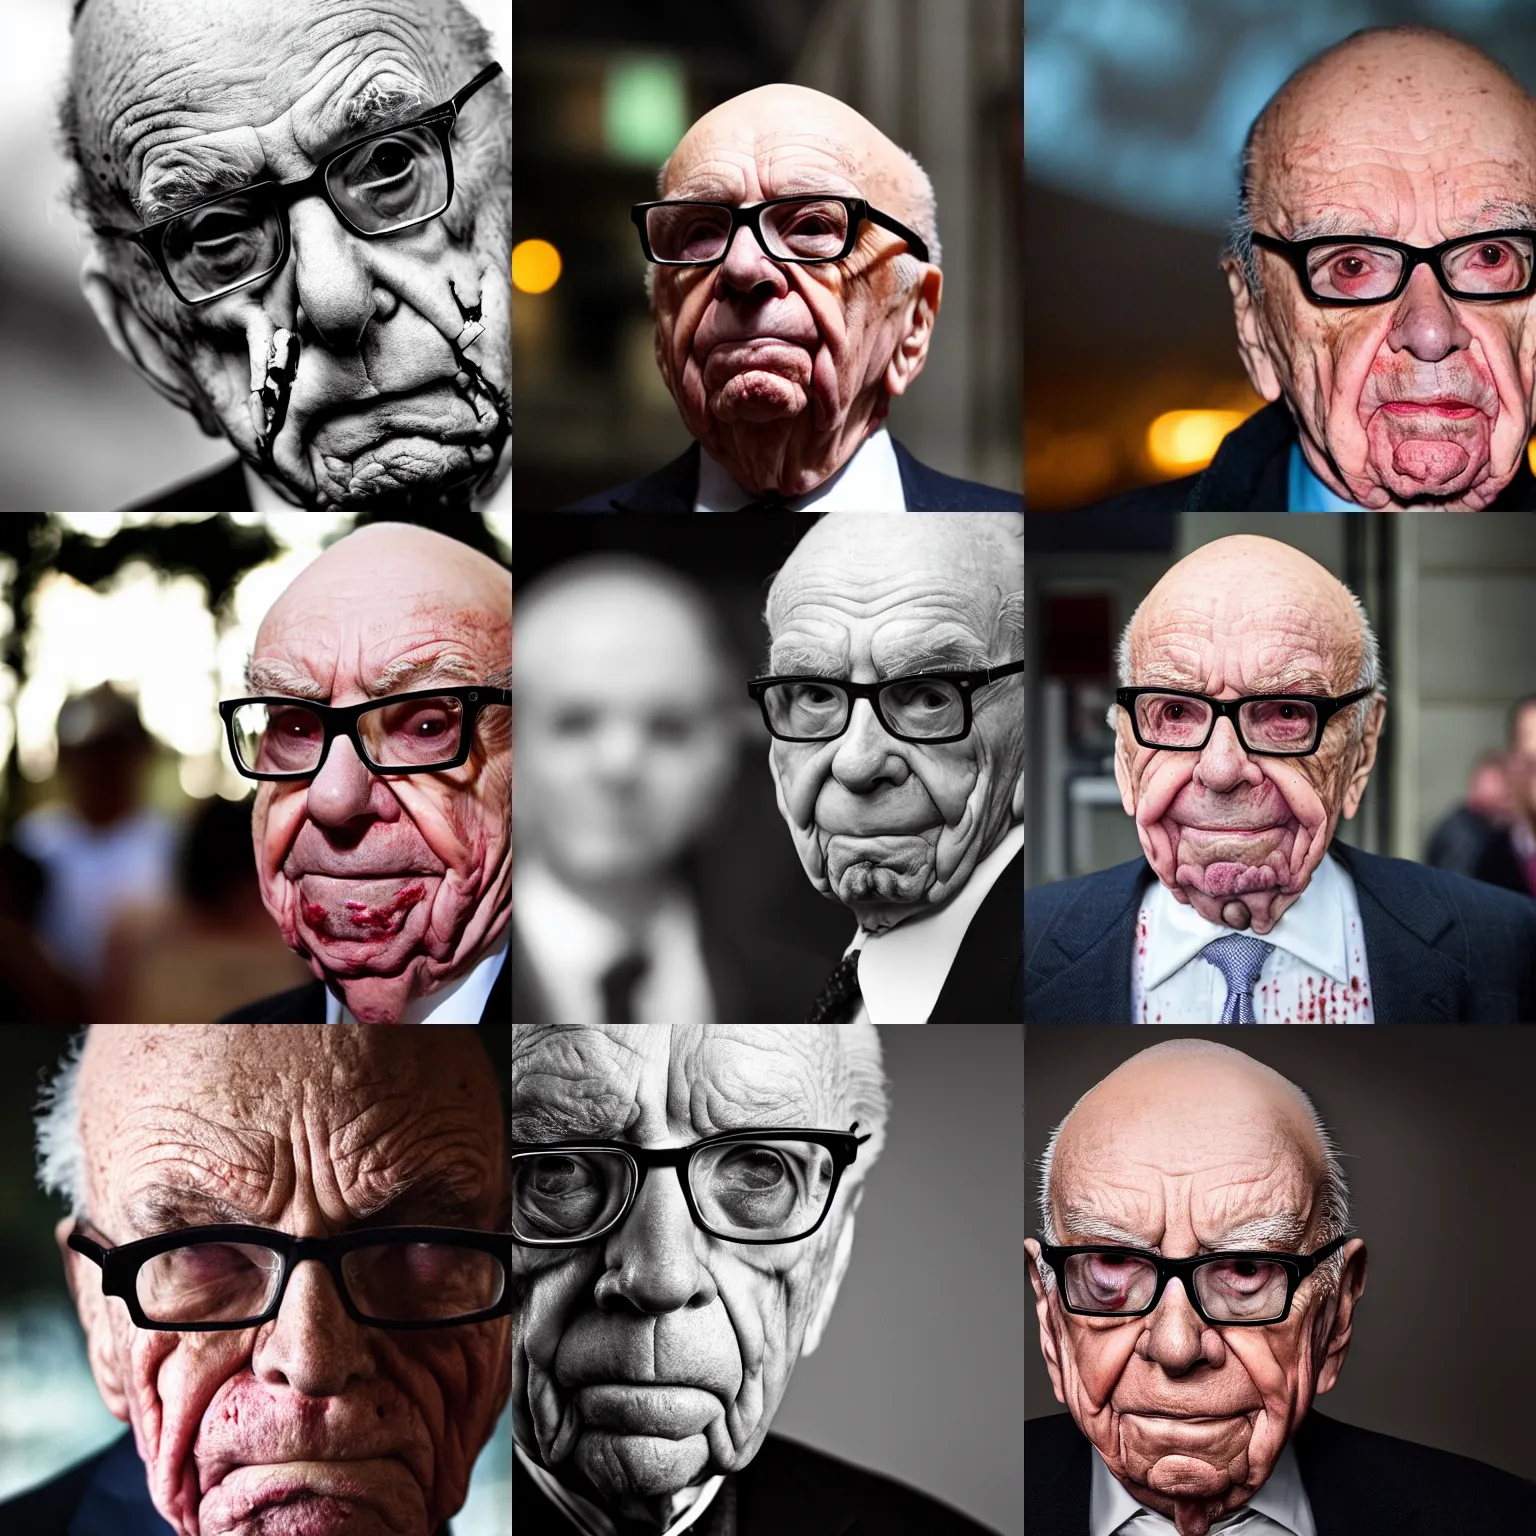 Prompt: Rupert Murdoch as a zombie, Rupert Murdoch, zombie, portrait photography, depth of field, bokeh